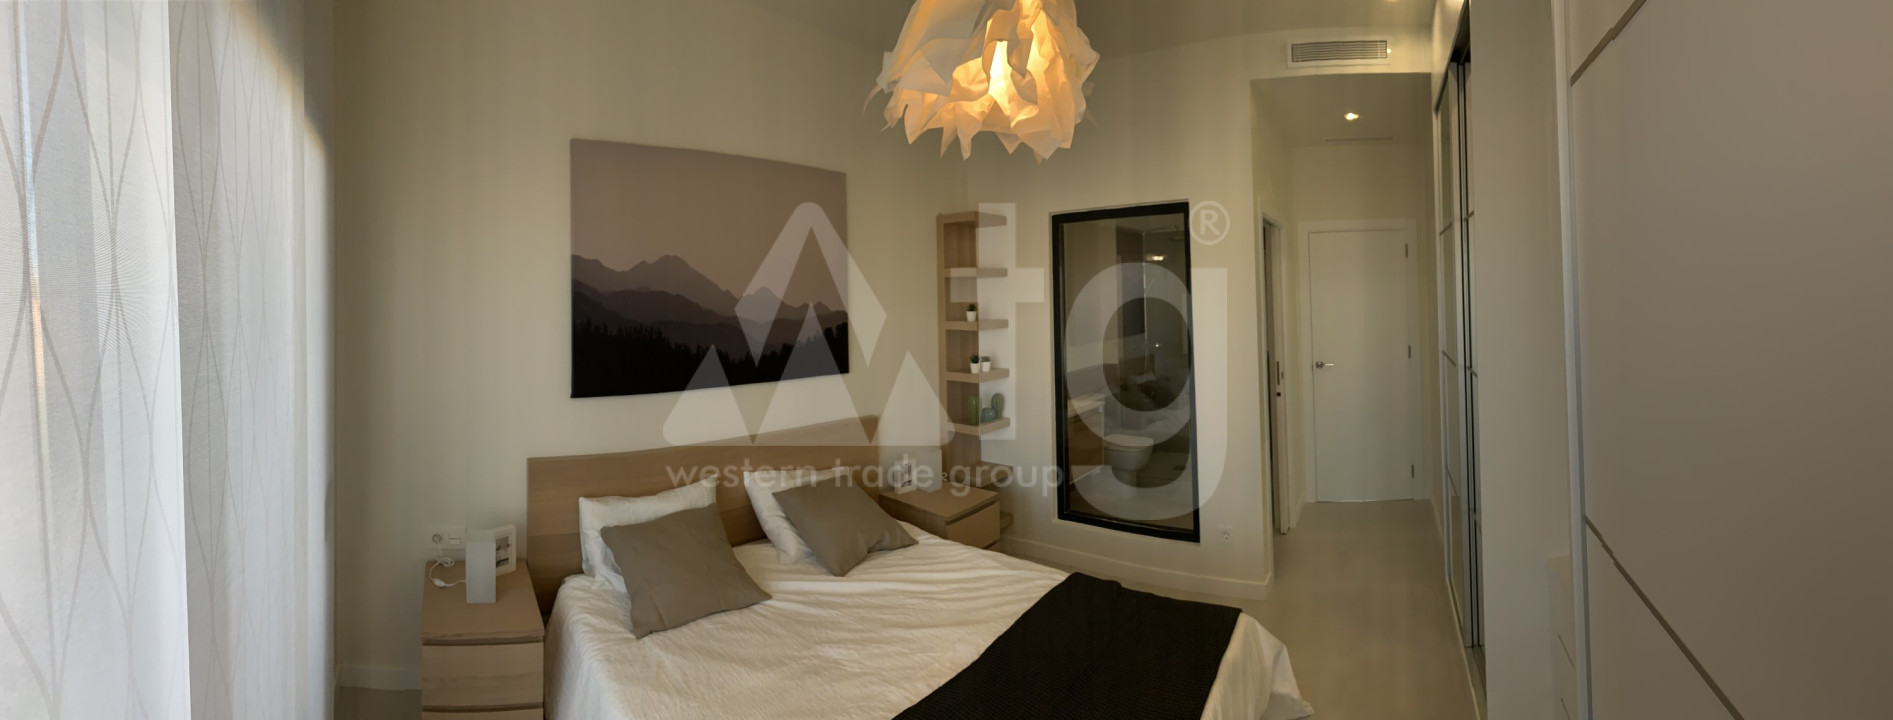 2 bedroom Apartment in Alhama de Murcia - OI119369 - 12